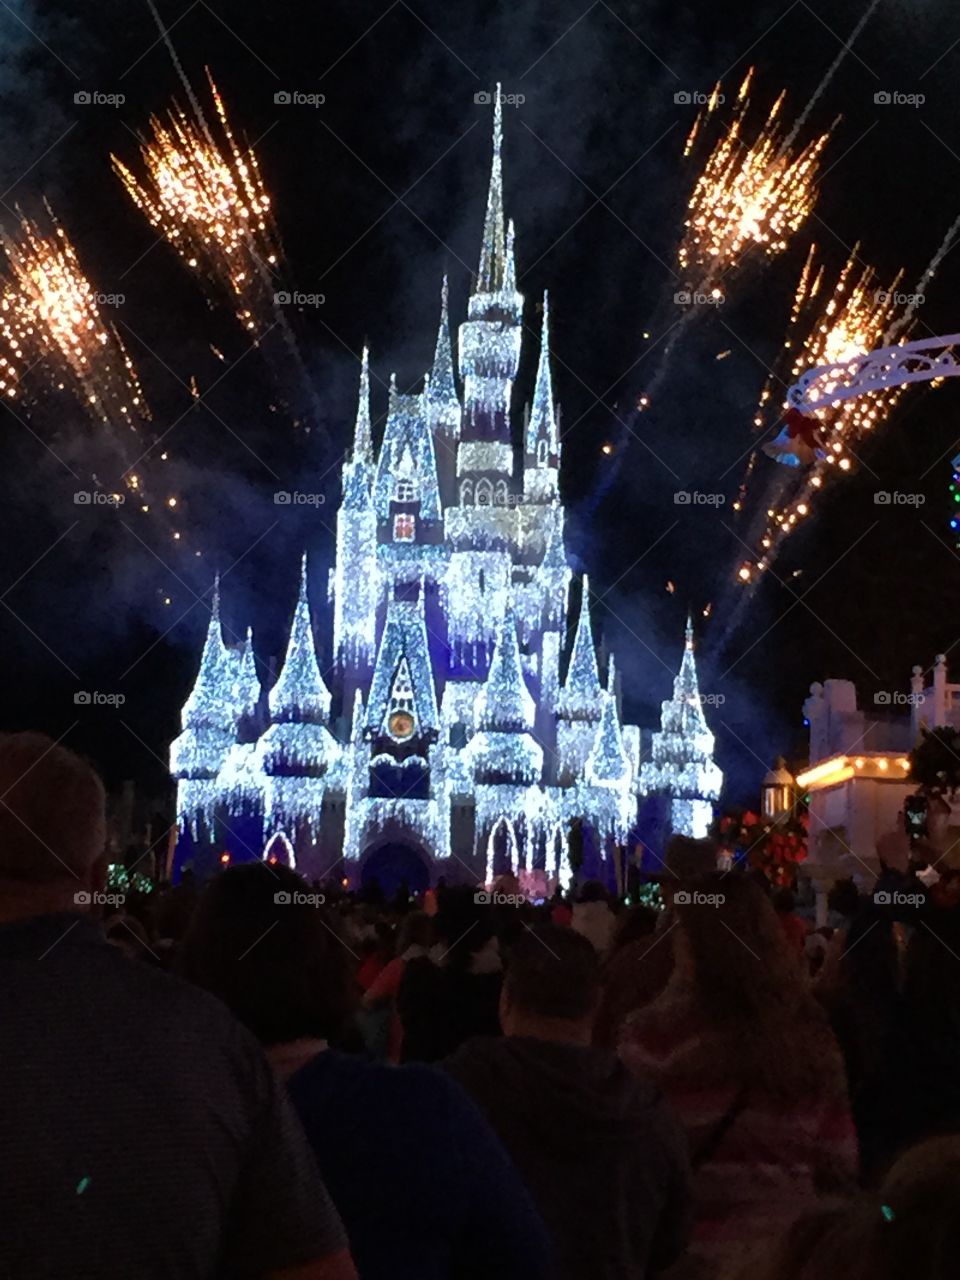 Cinderella's castle with fireworks